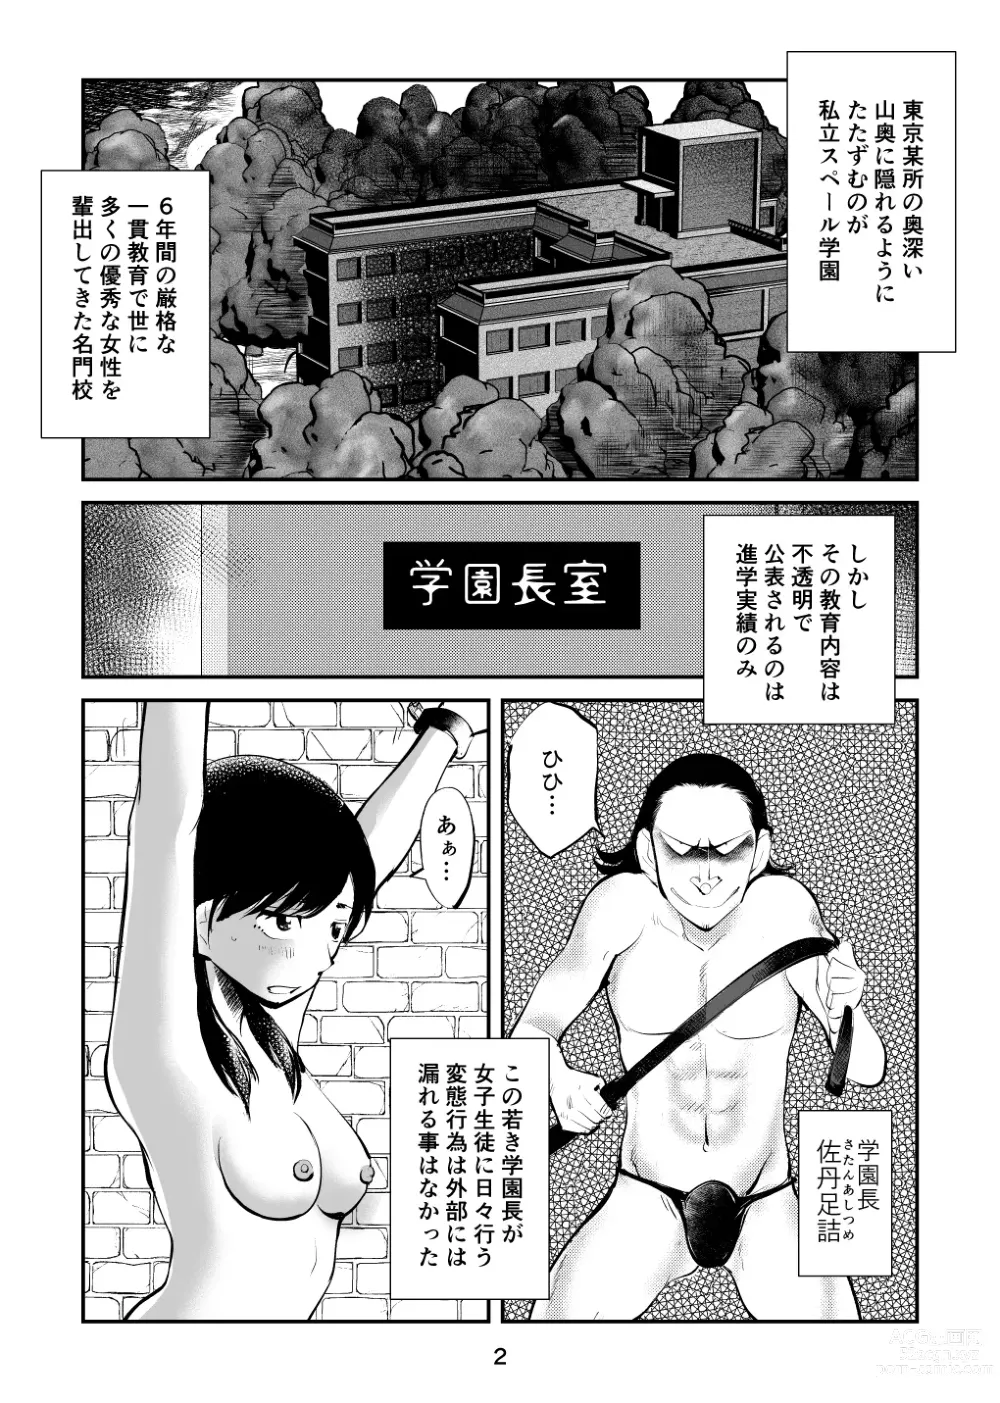 Page 2 of doujinshi Zetchō kamen hentai kyōshi chin ori tamatsubushi